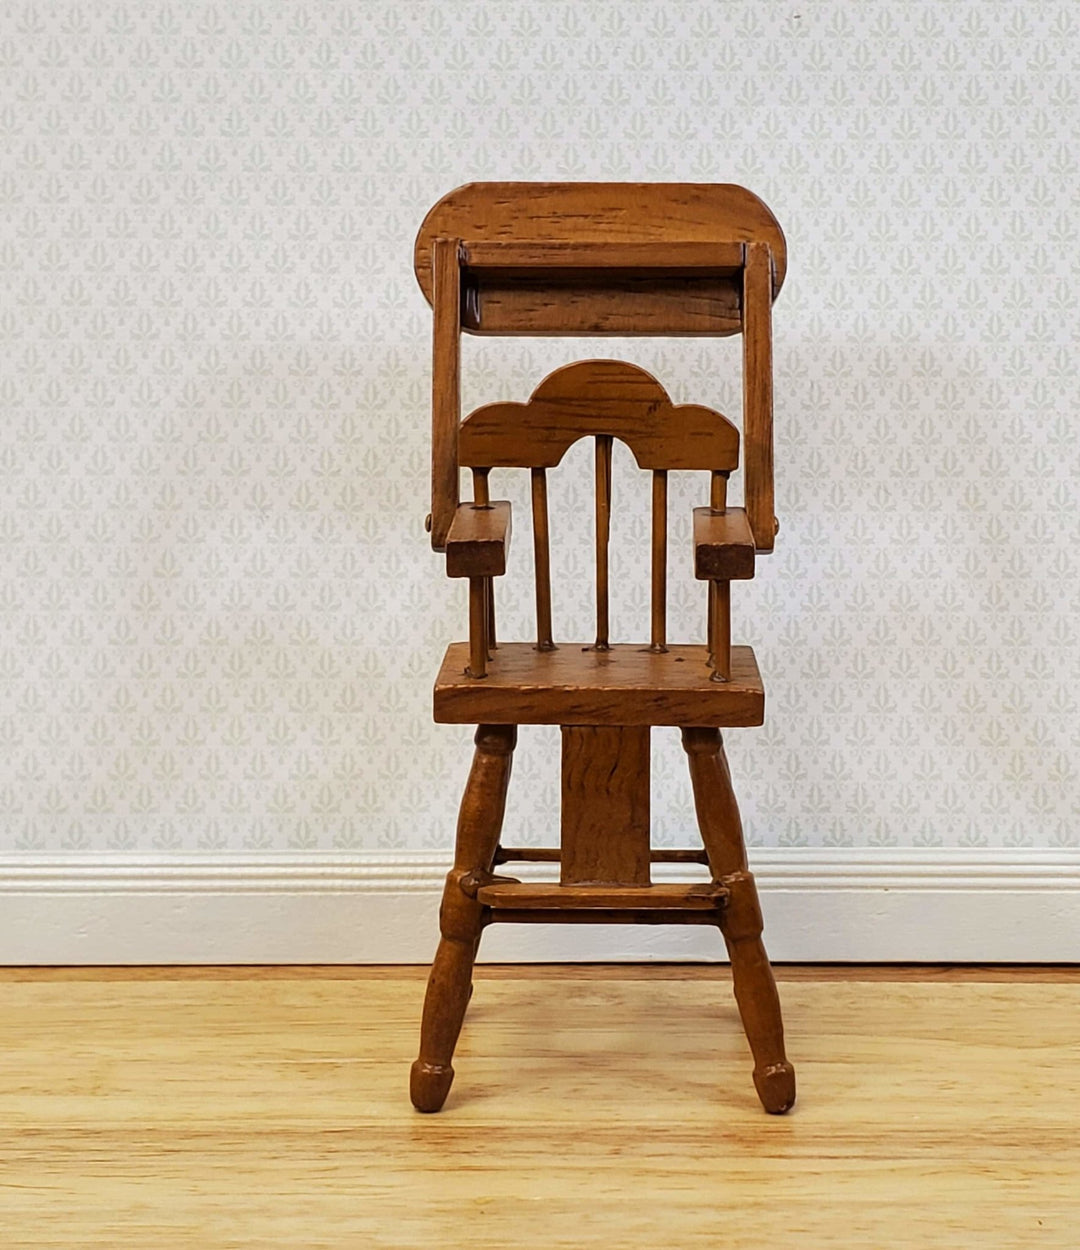 Dollhouse Nursery Room Set Crib High Chair Wardrobe 1:12 Scale Miniatures Walnut Finish - Miniature Crush